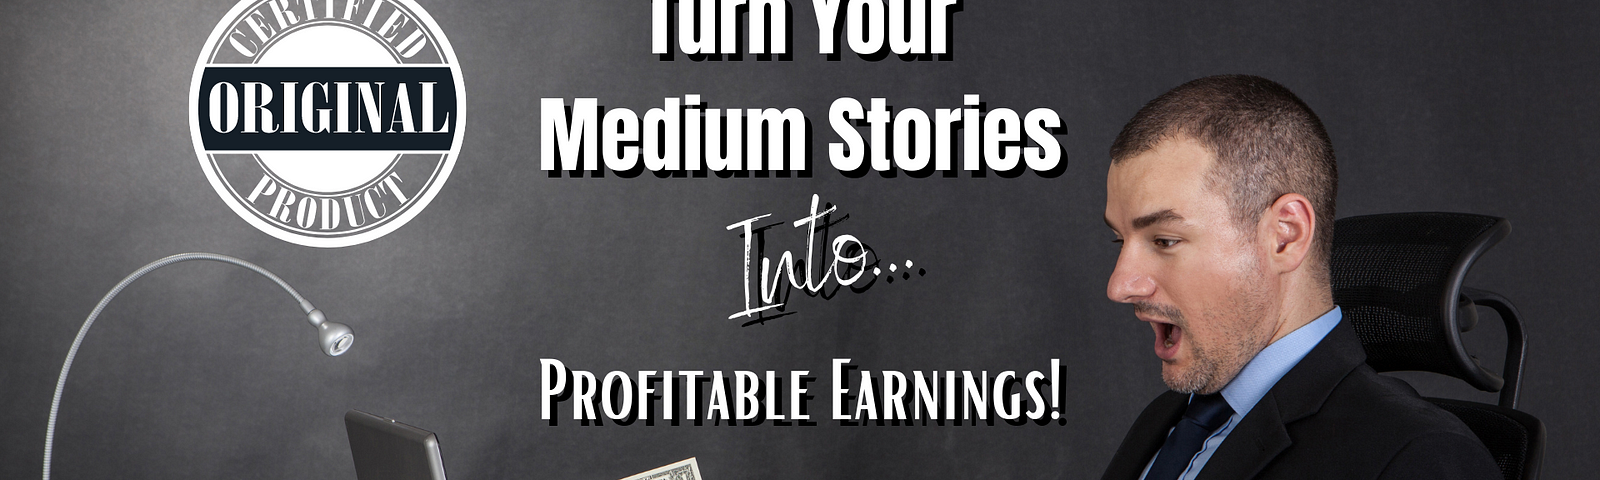 turning medium stories into profitable earnings